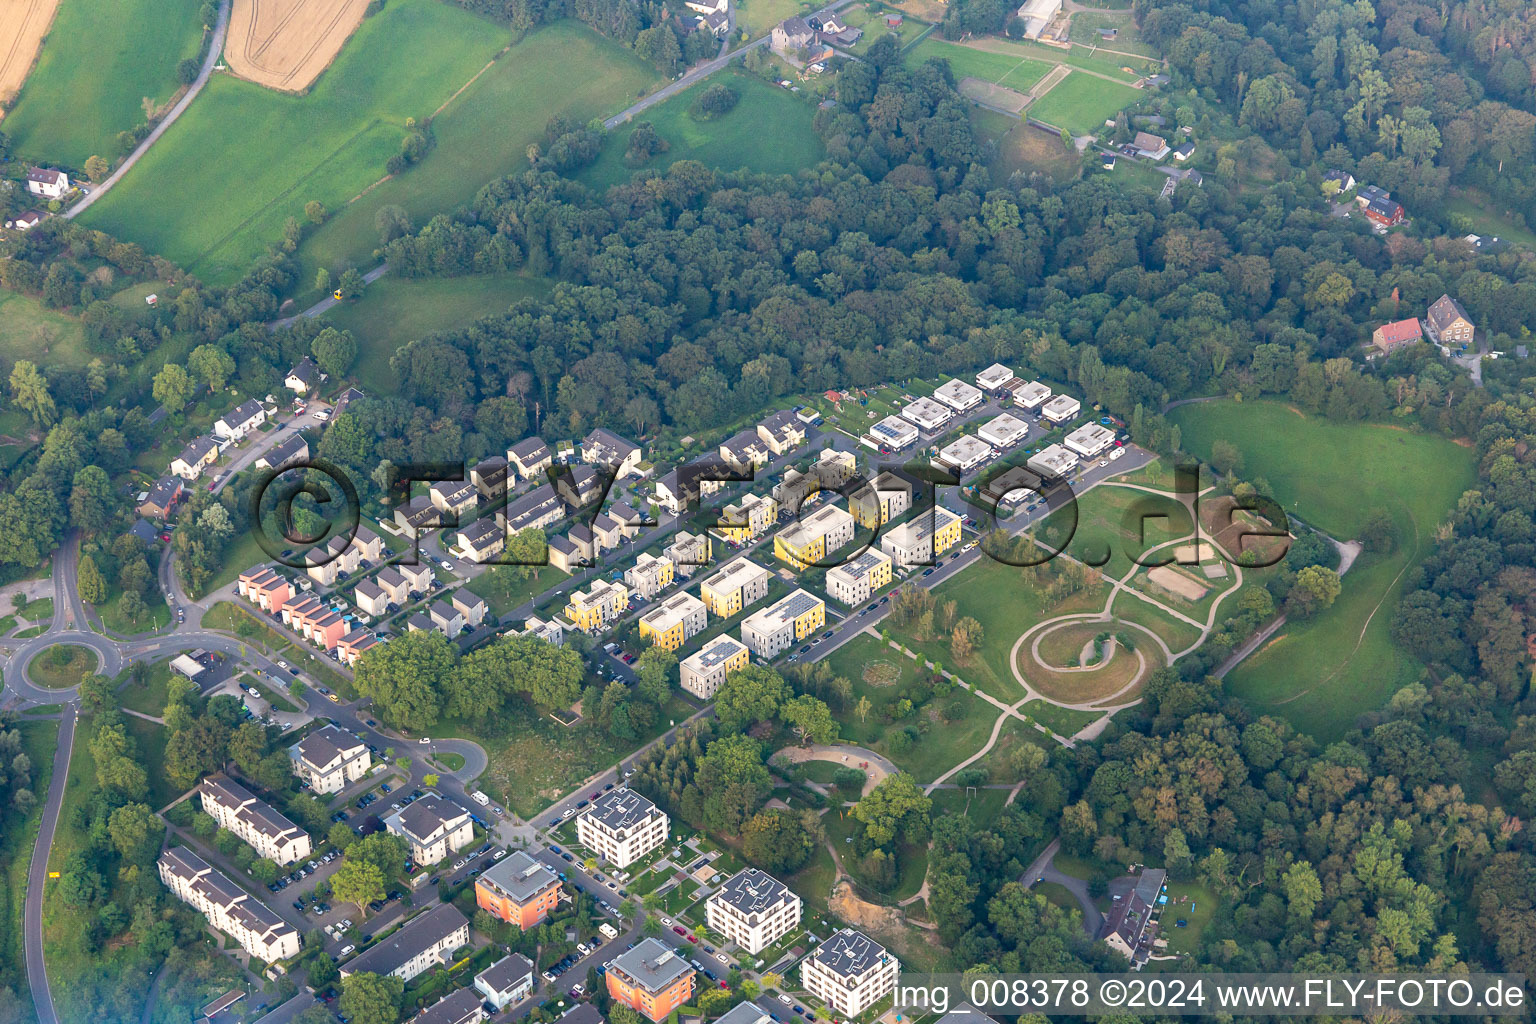 Park of Spielplatz Kupferdreh on Dilldorfer Hoehe in the district Kupferdreh in Essen in the state North Rhine-Westphalia, Germany